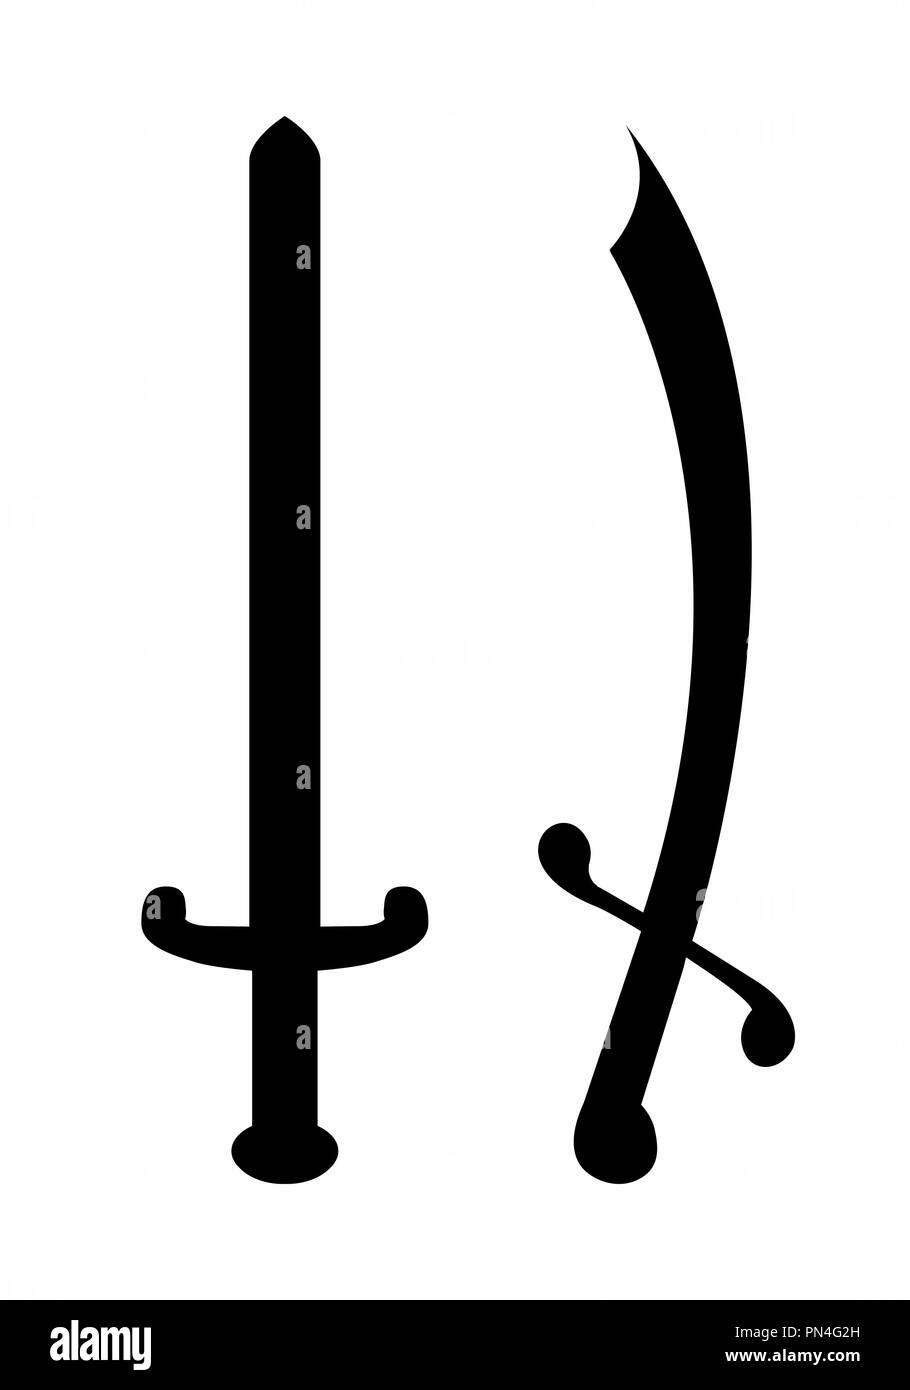 Swords silhouettes illustration Stock Vector